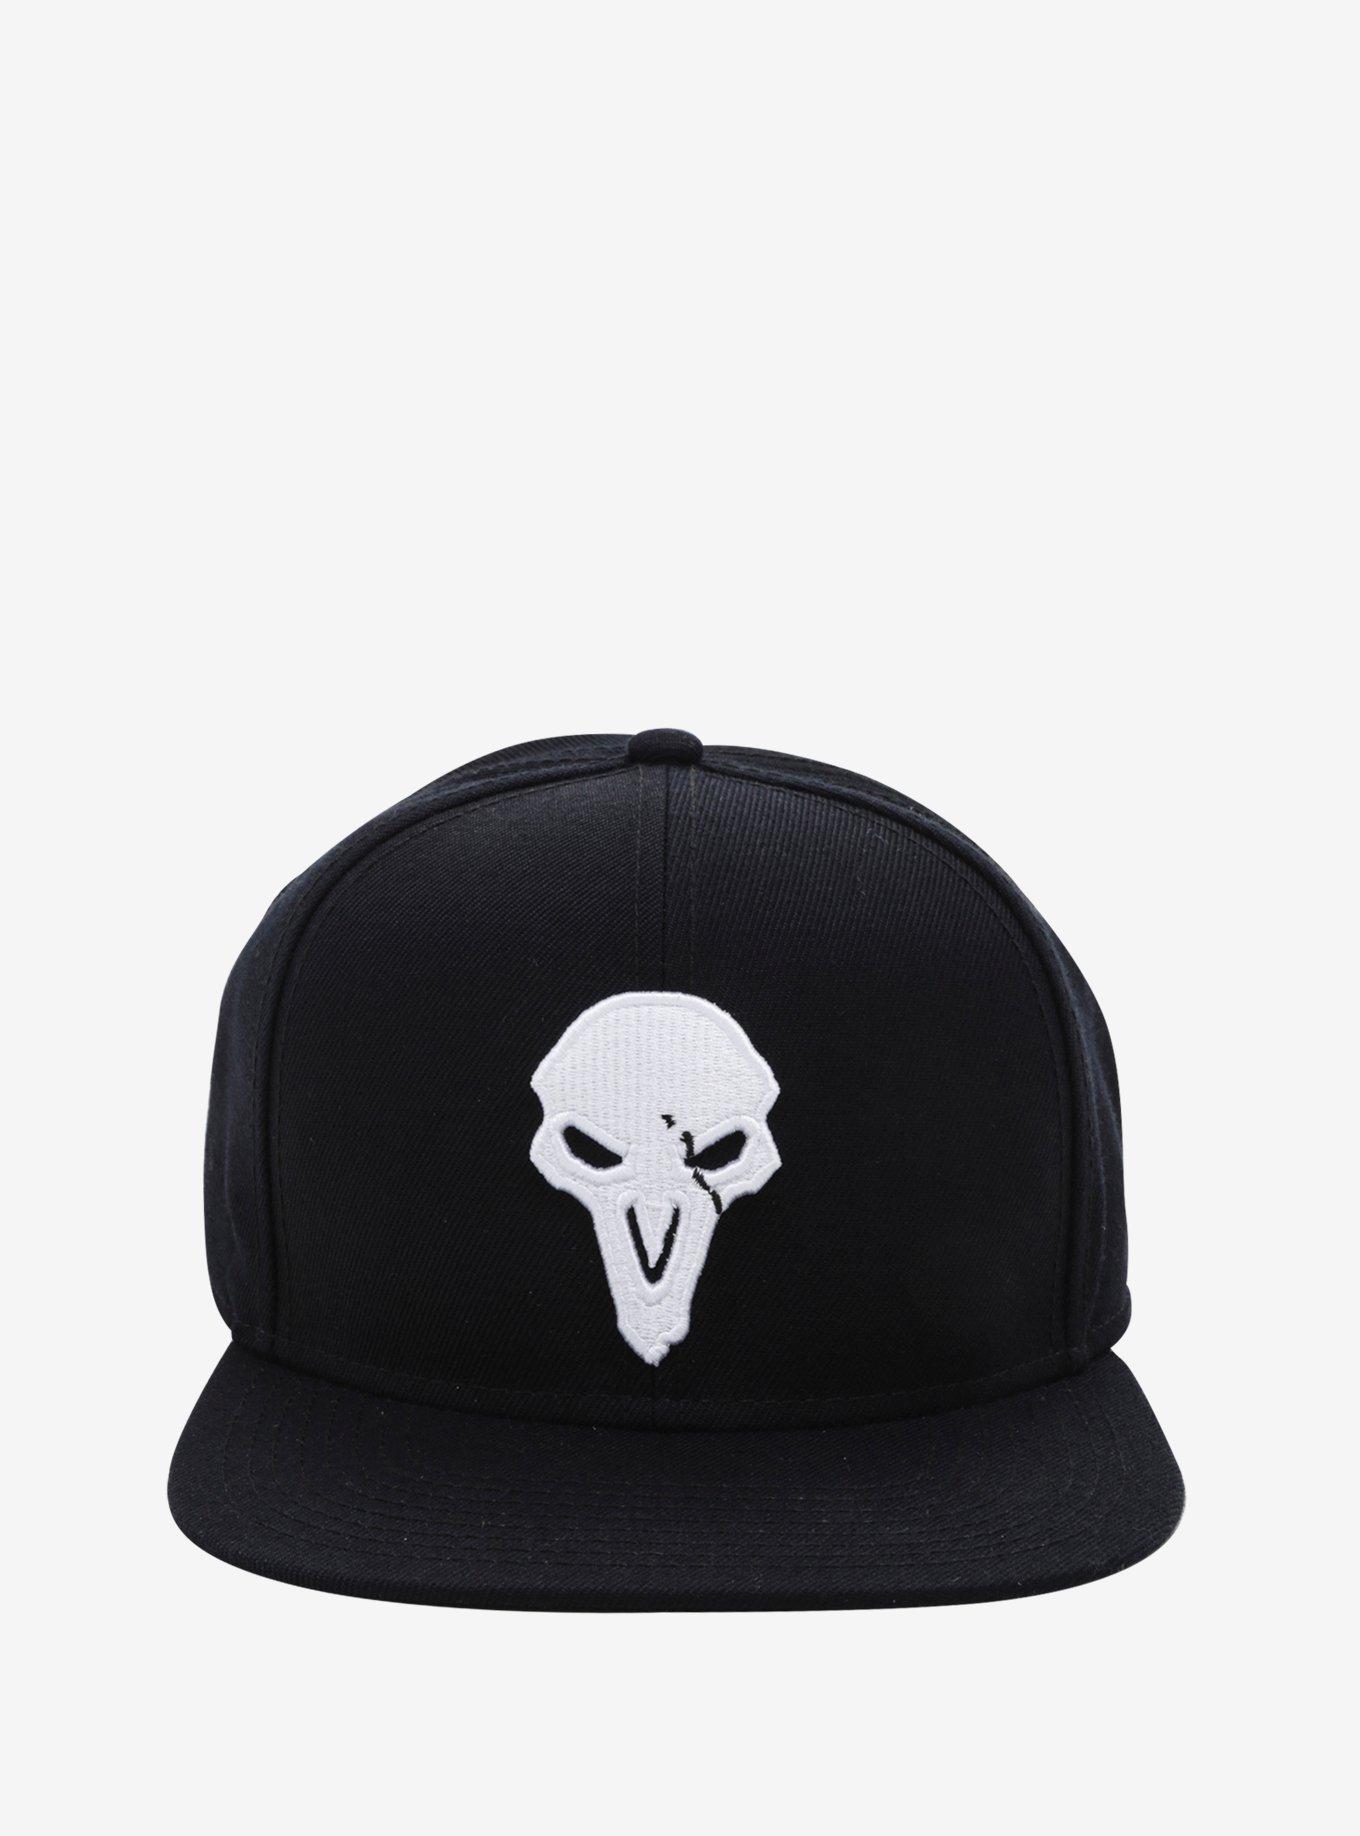 Overwatch Reaper Snapback Hat, , alternate